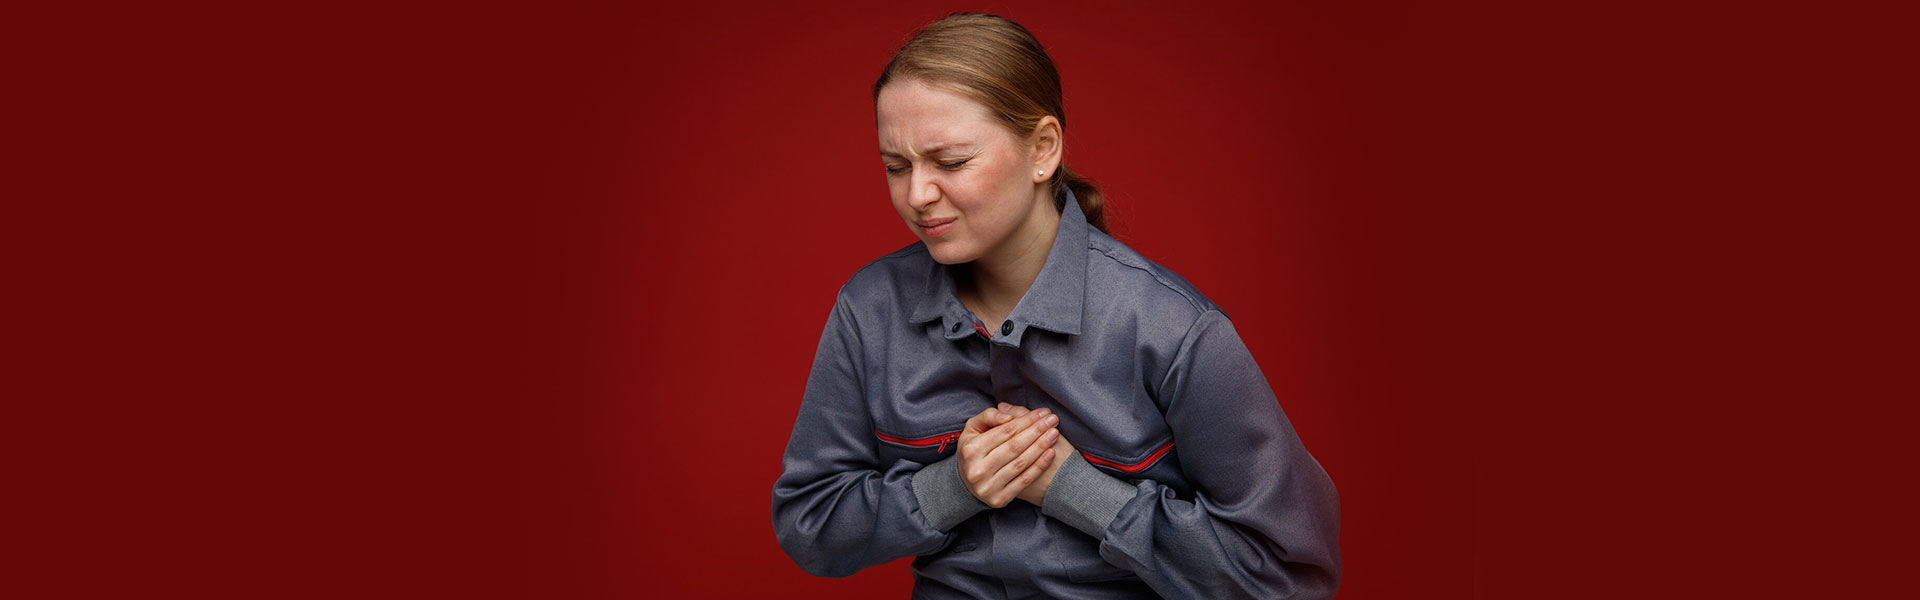 Hidden Heart Attack Signs Most Women Ignore